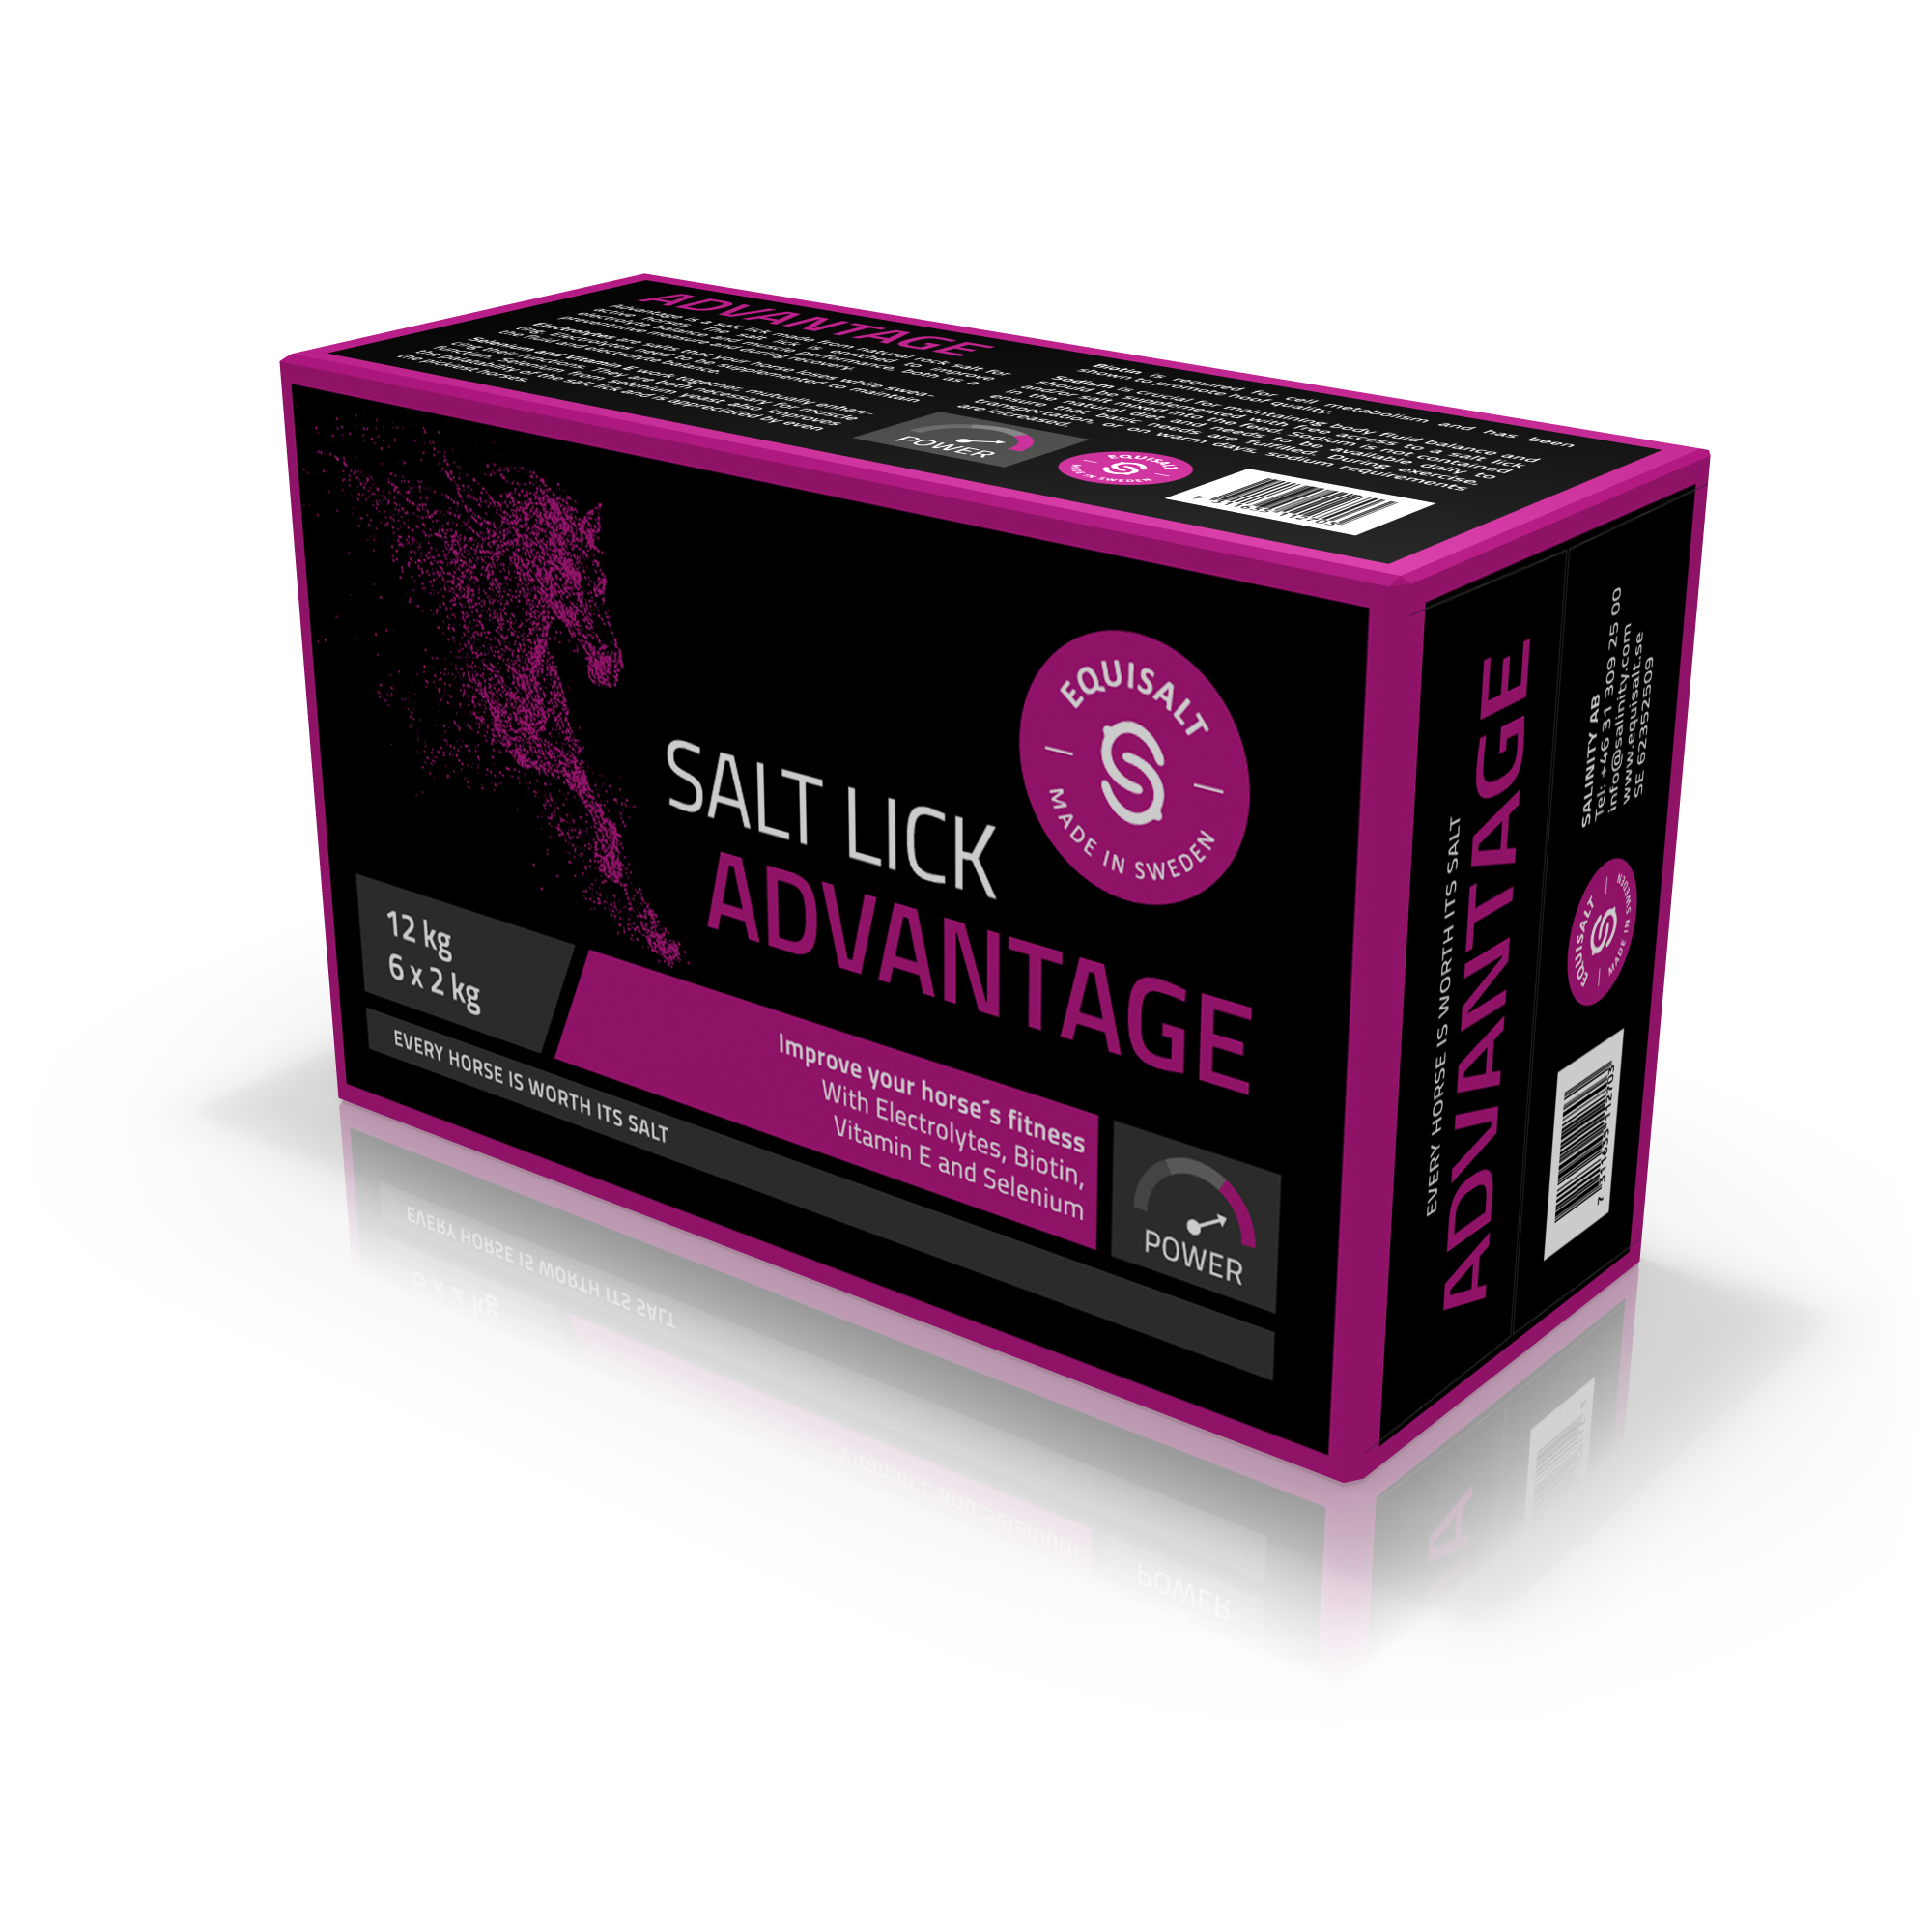 Saltsten Equisalt Advantage, 6x2kg